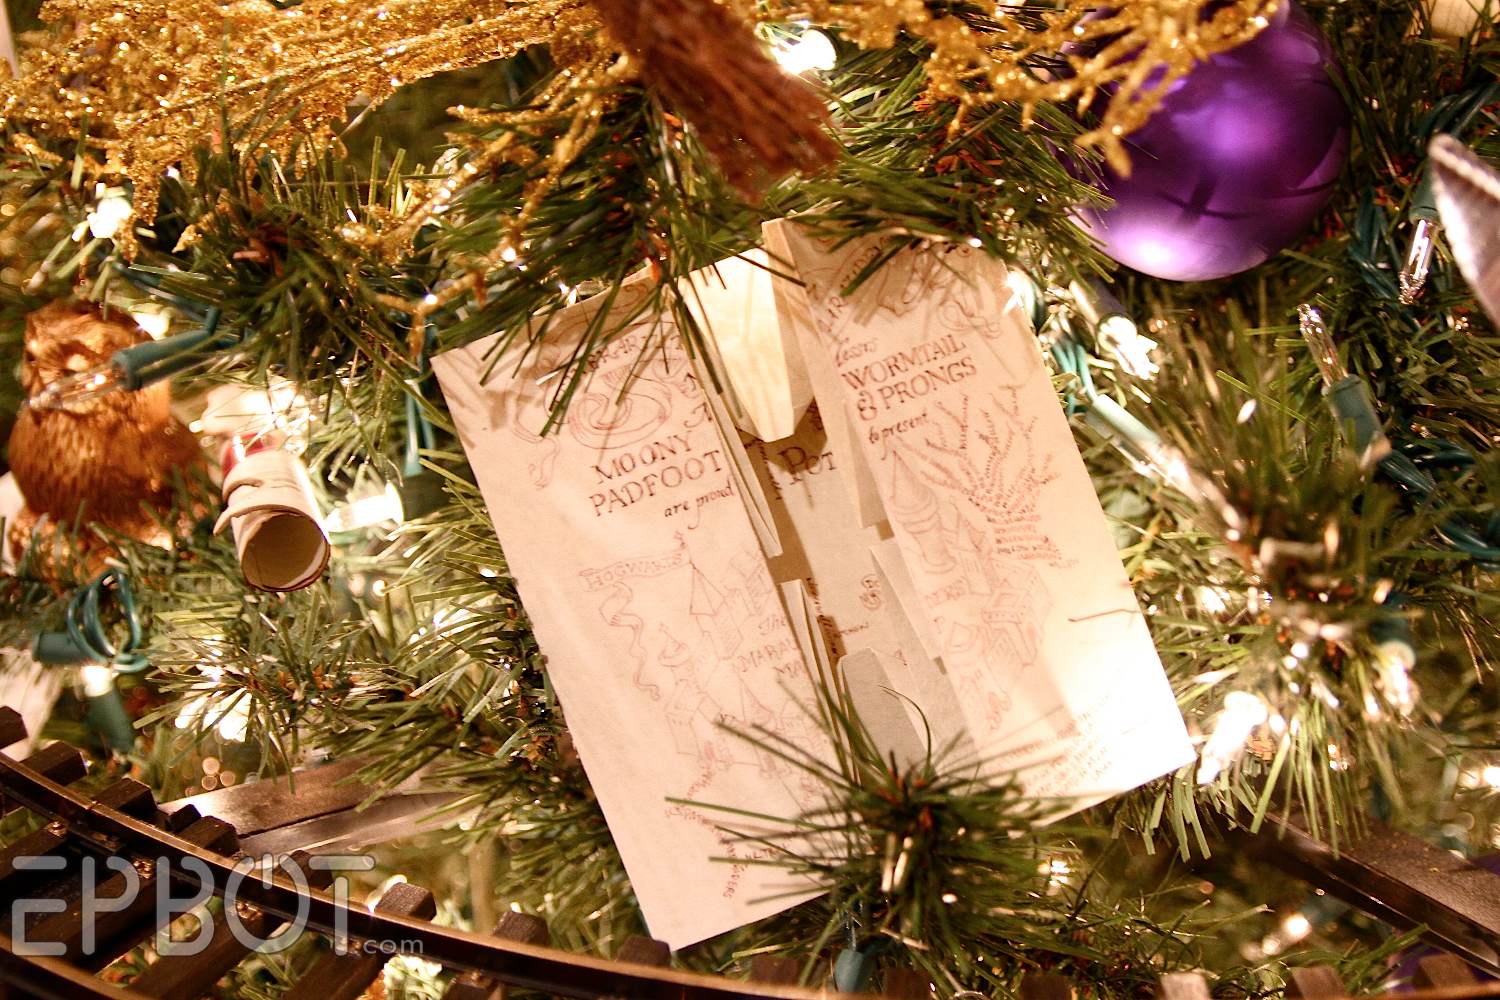 EPBOT: Harry Potter Inspired Floating Christmas Candles!